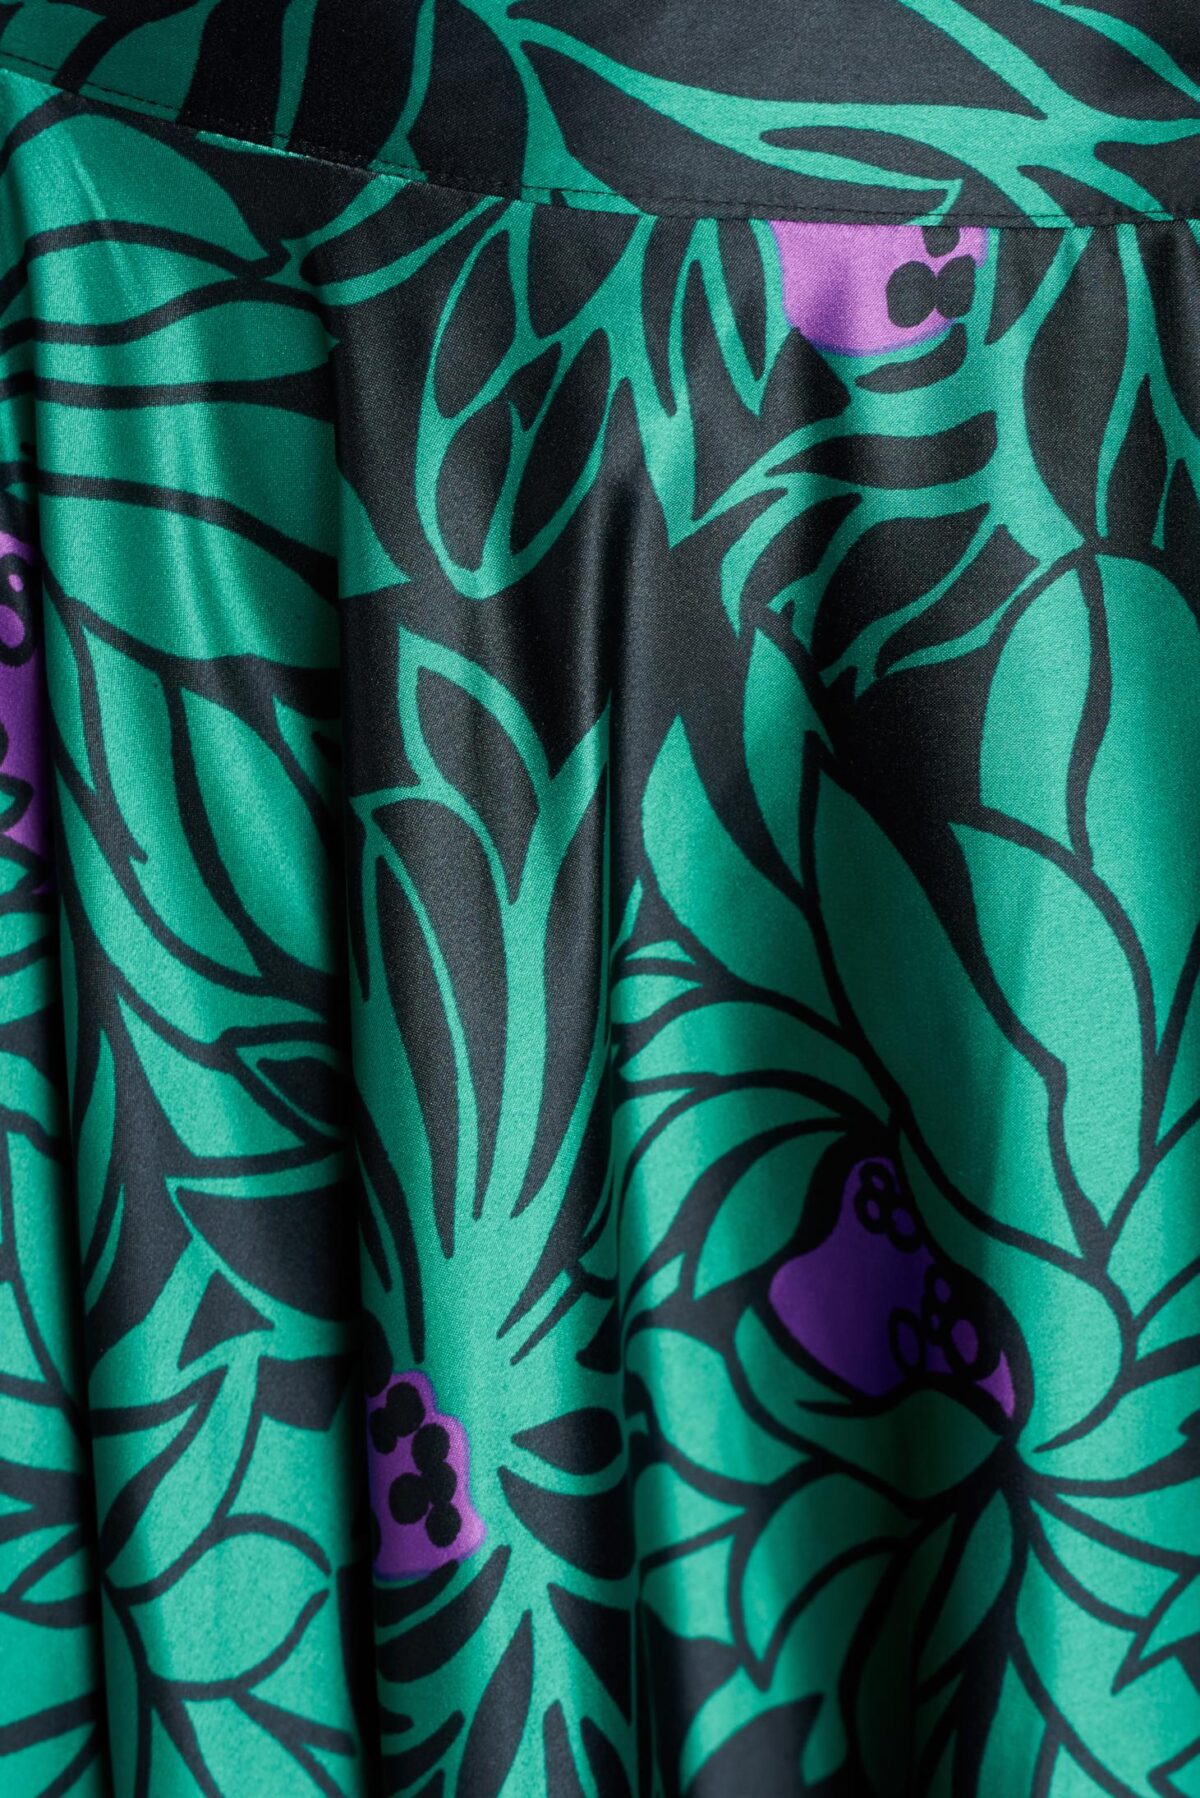 Green Elegant Long Skirt With Satin Fabric Texture